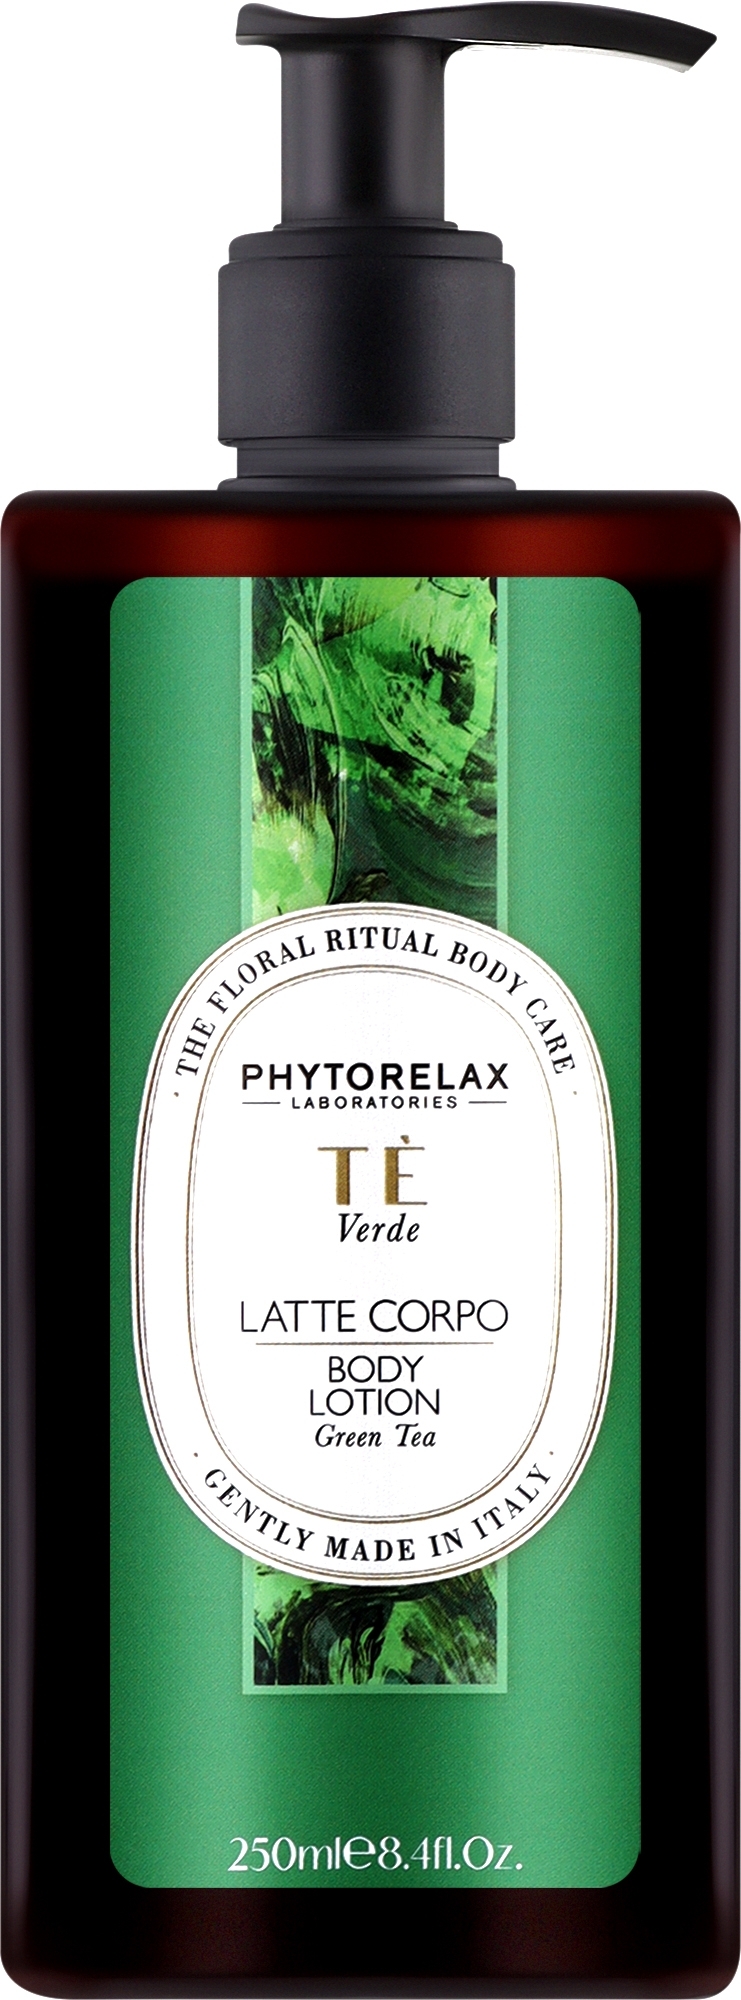 Green Tea Body Lotion - Phytorelax Laboratories Floral Ritual Body Lotion — photo 250 ml